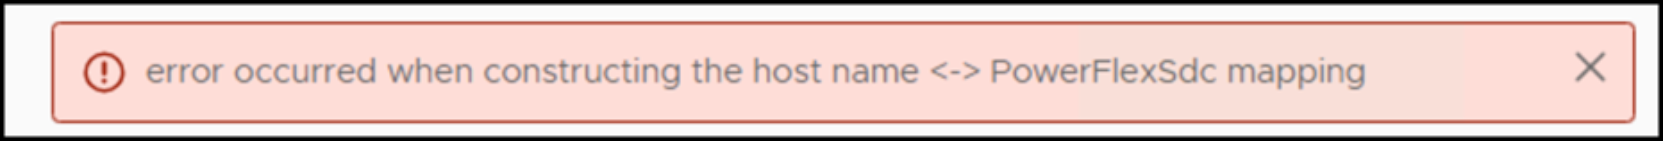 Error constructing host name message